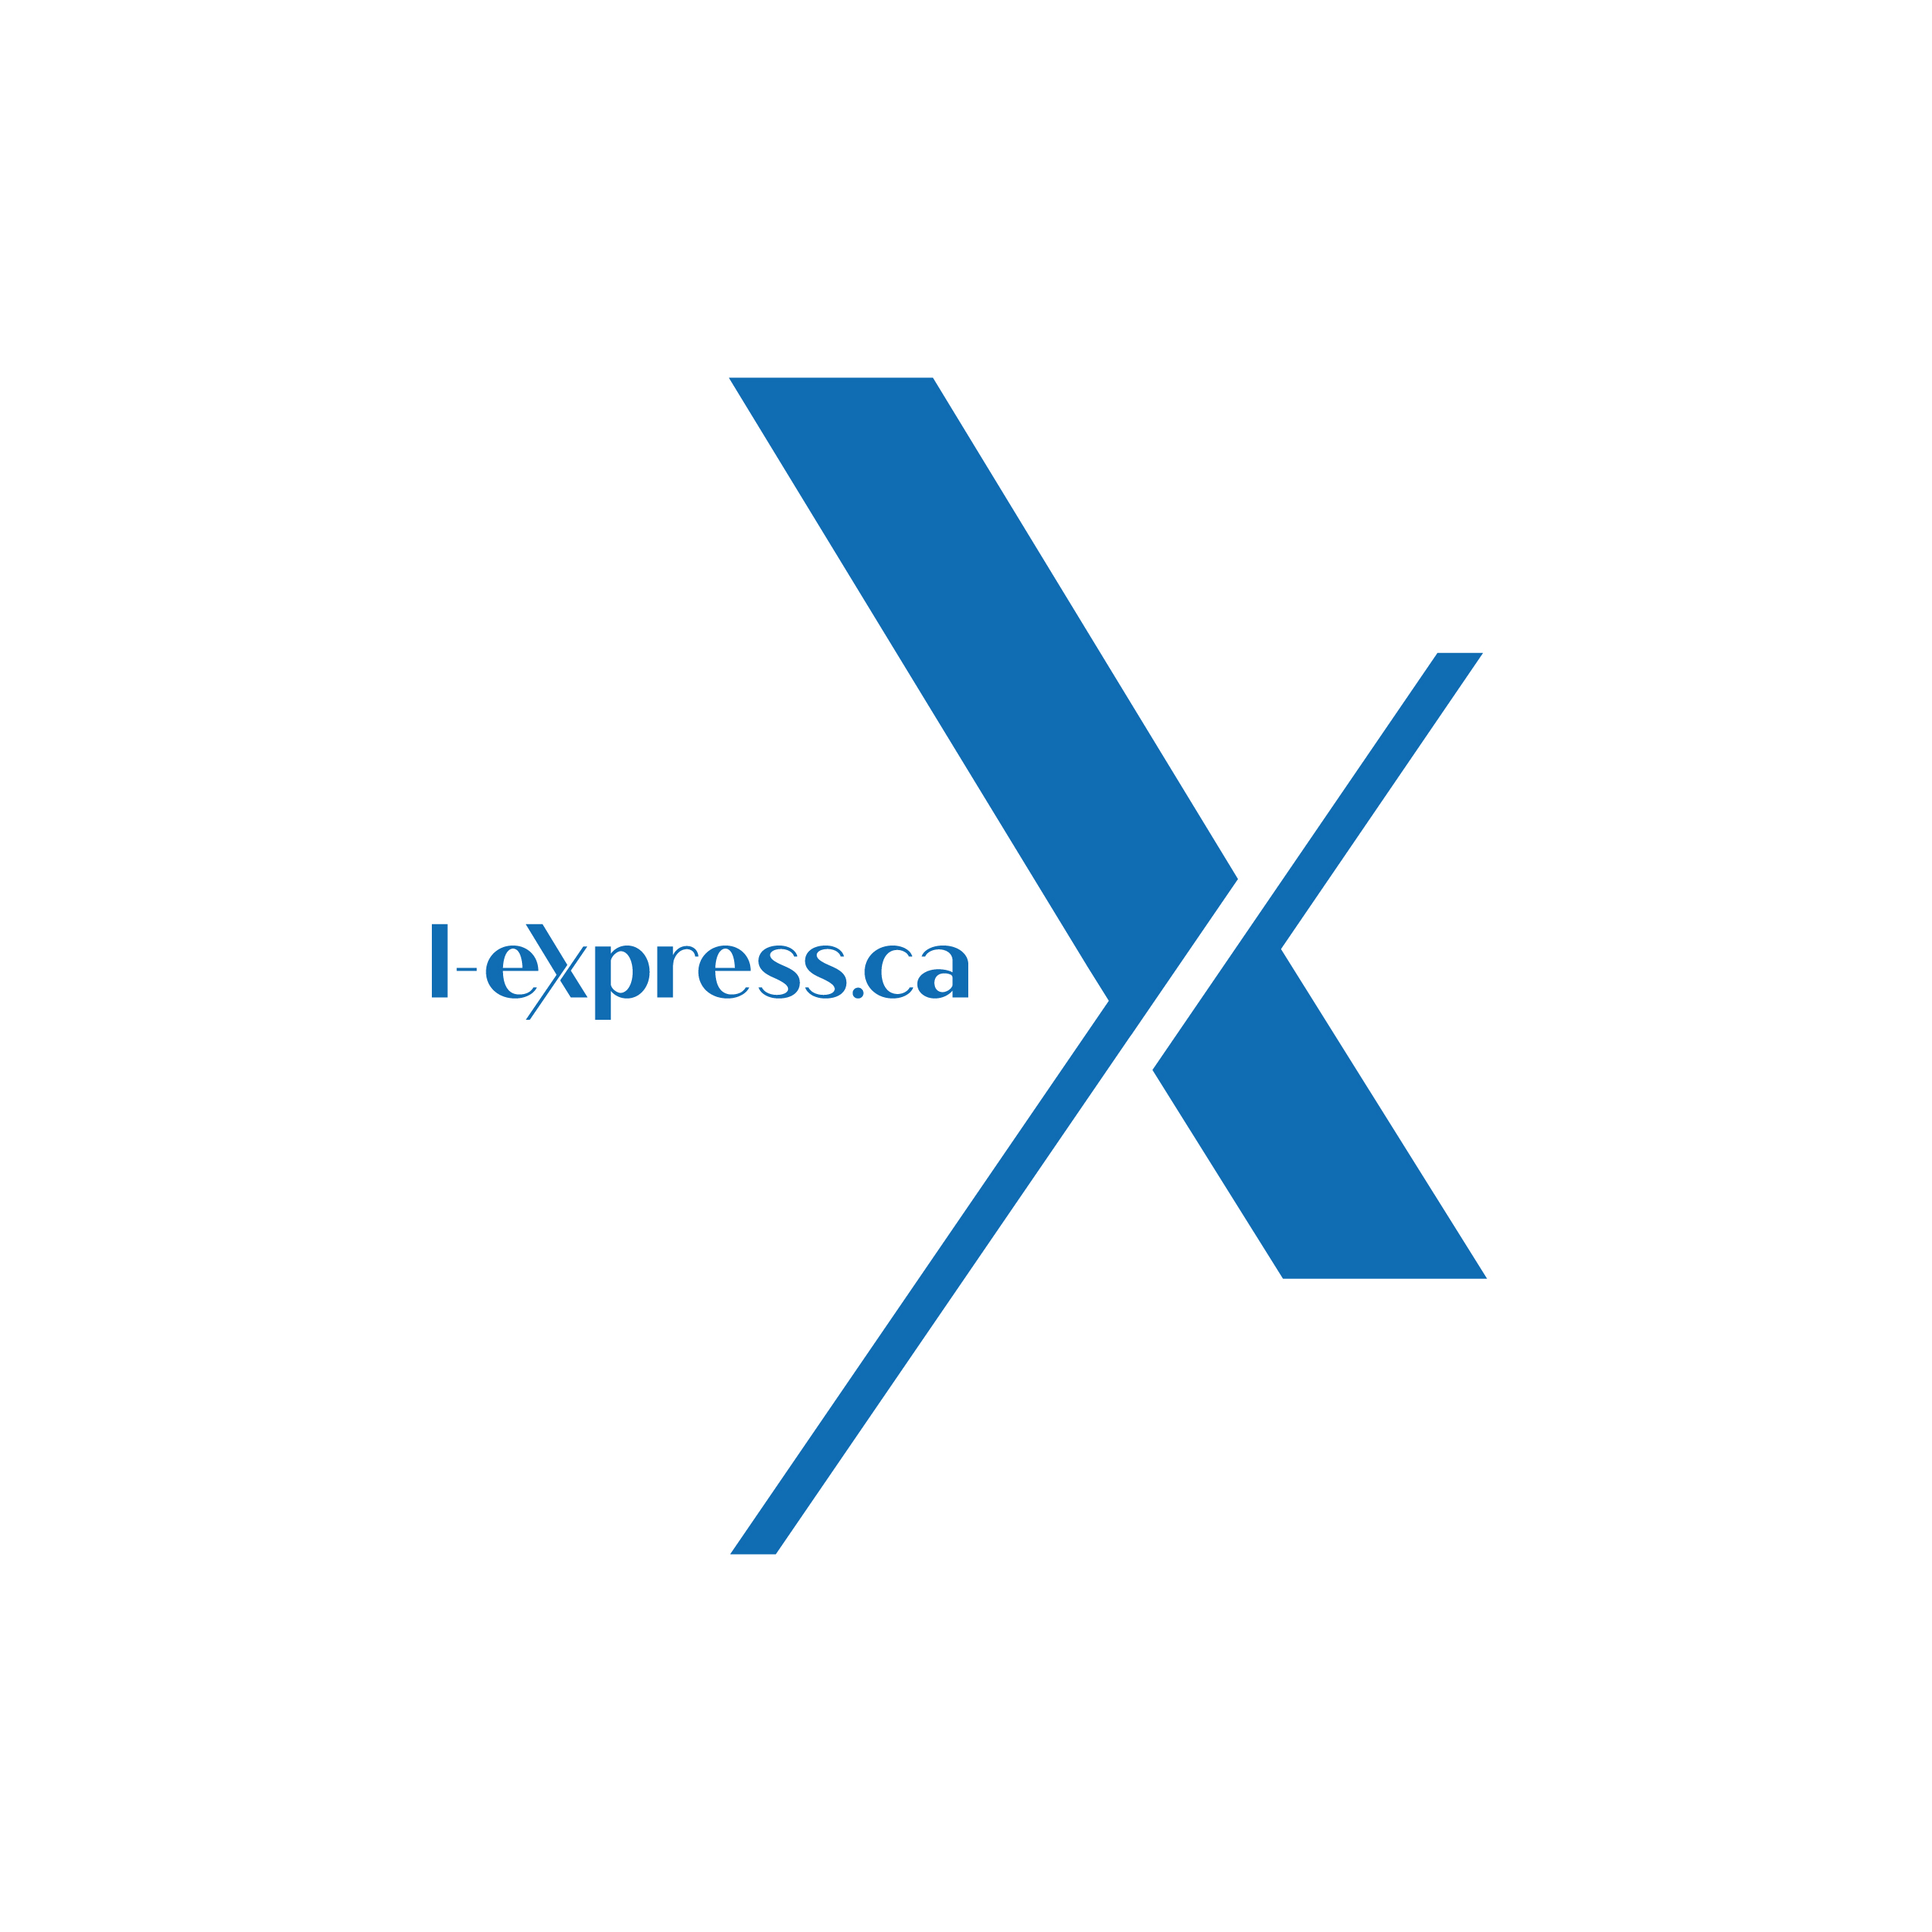 L-express-ca-logo-square